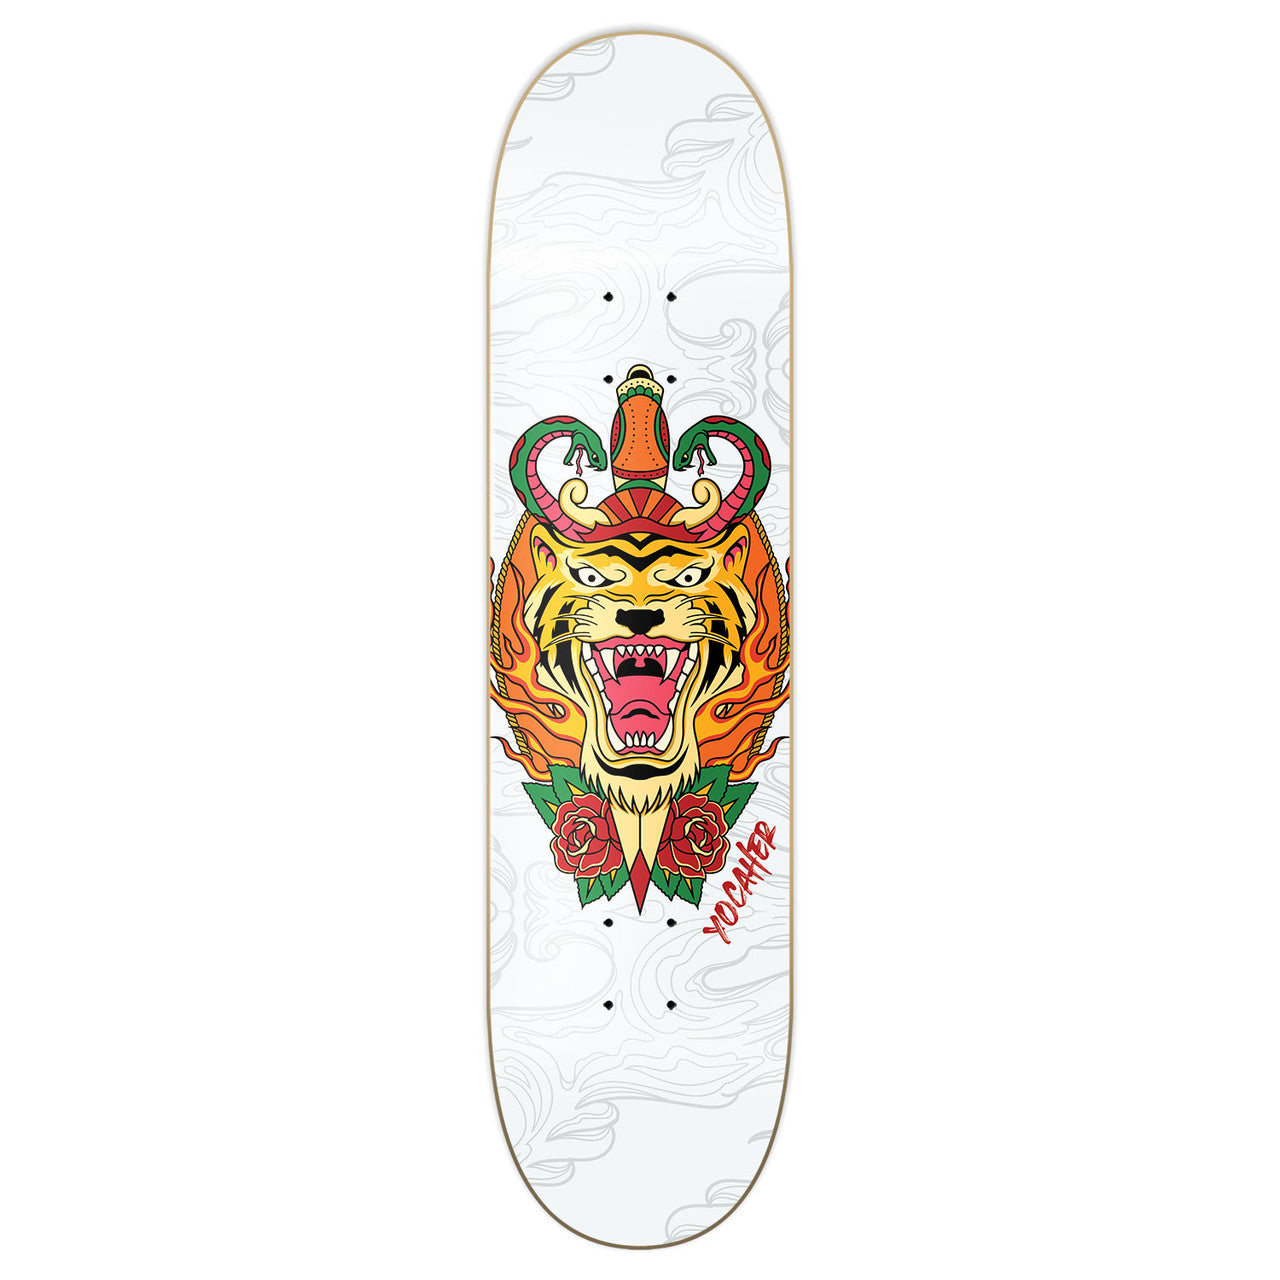 Yocaher Graphic Skateboard Deck  - Flaming Tiger